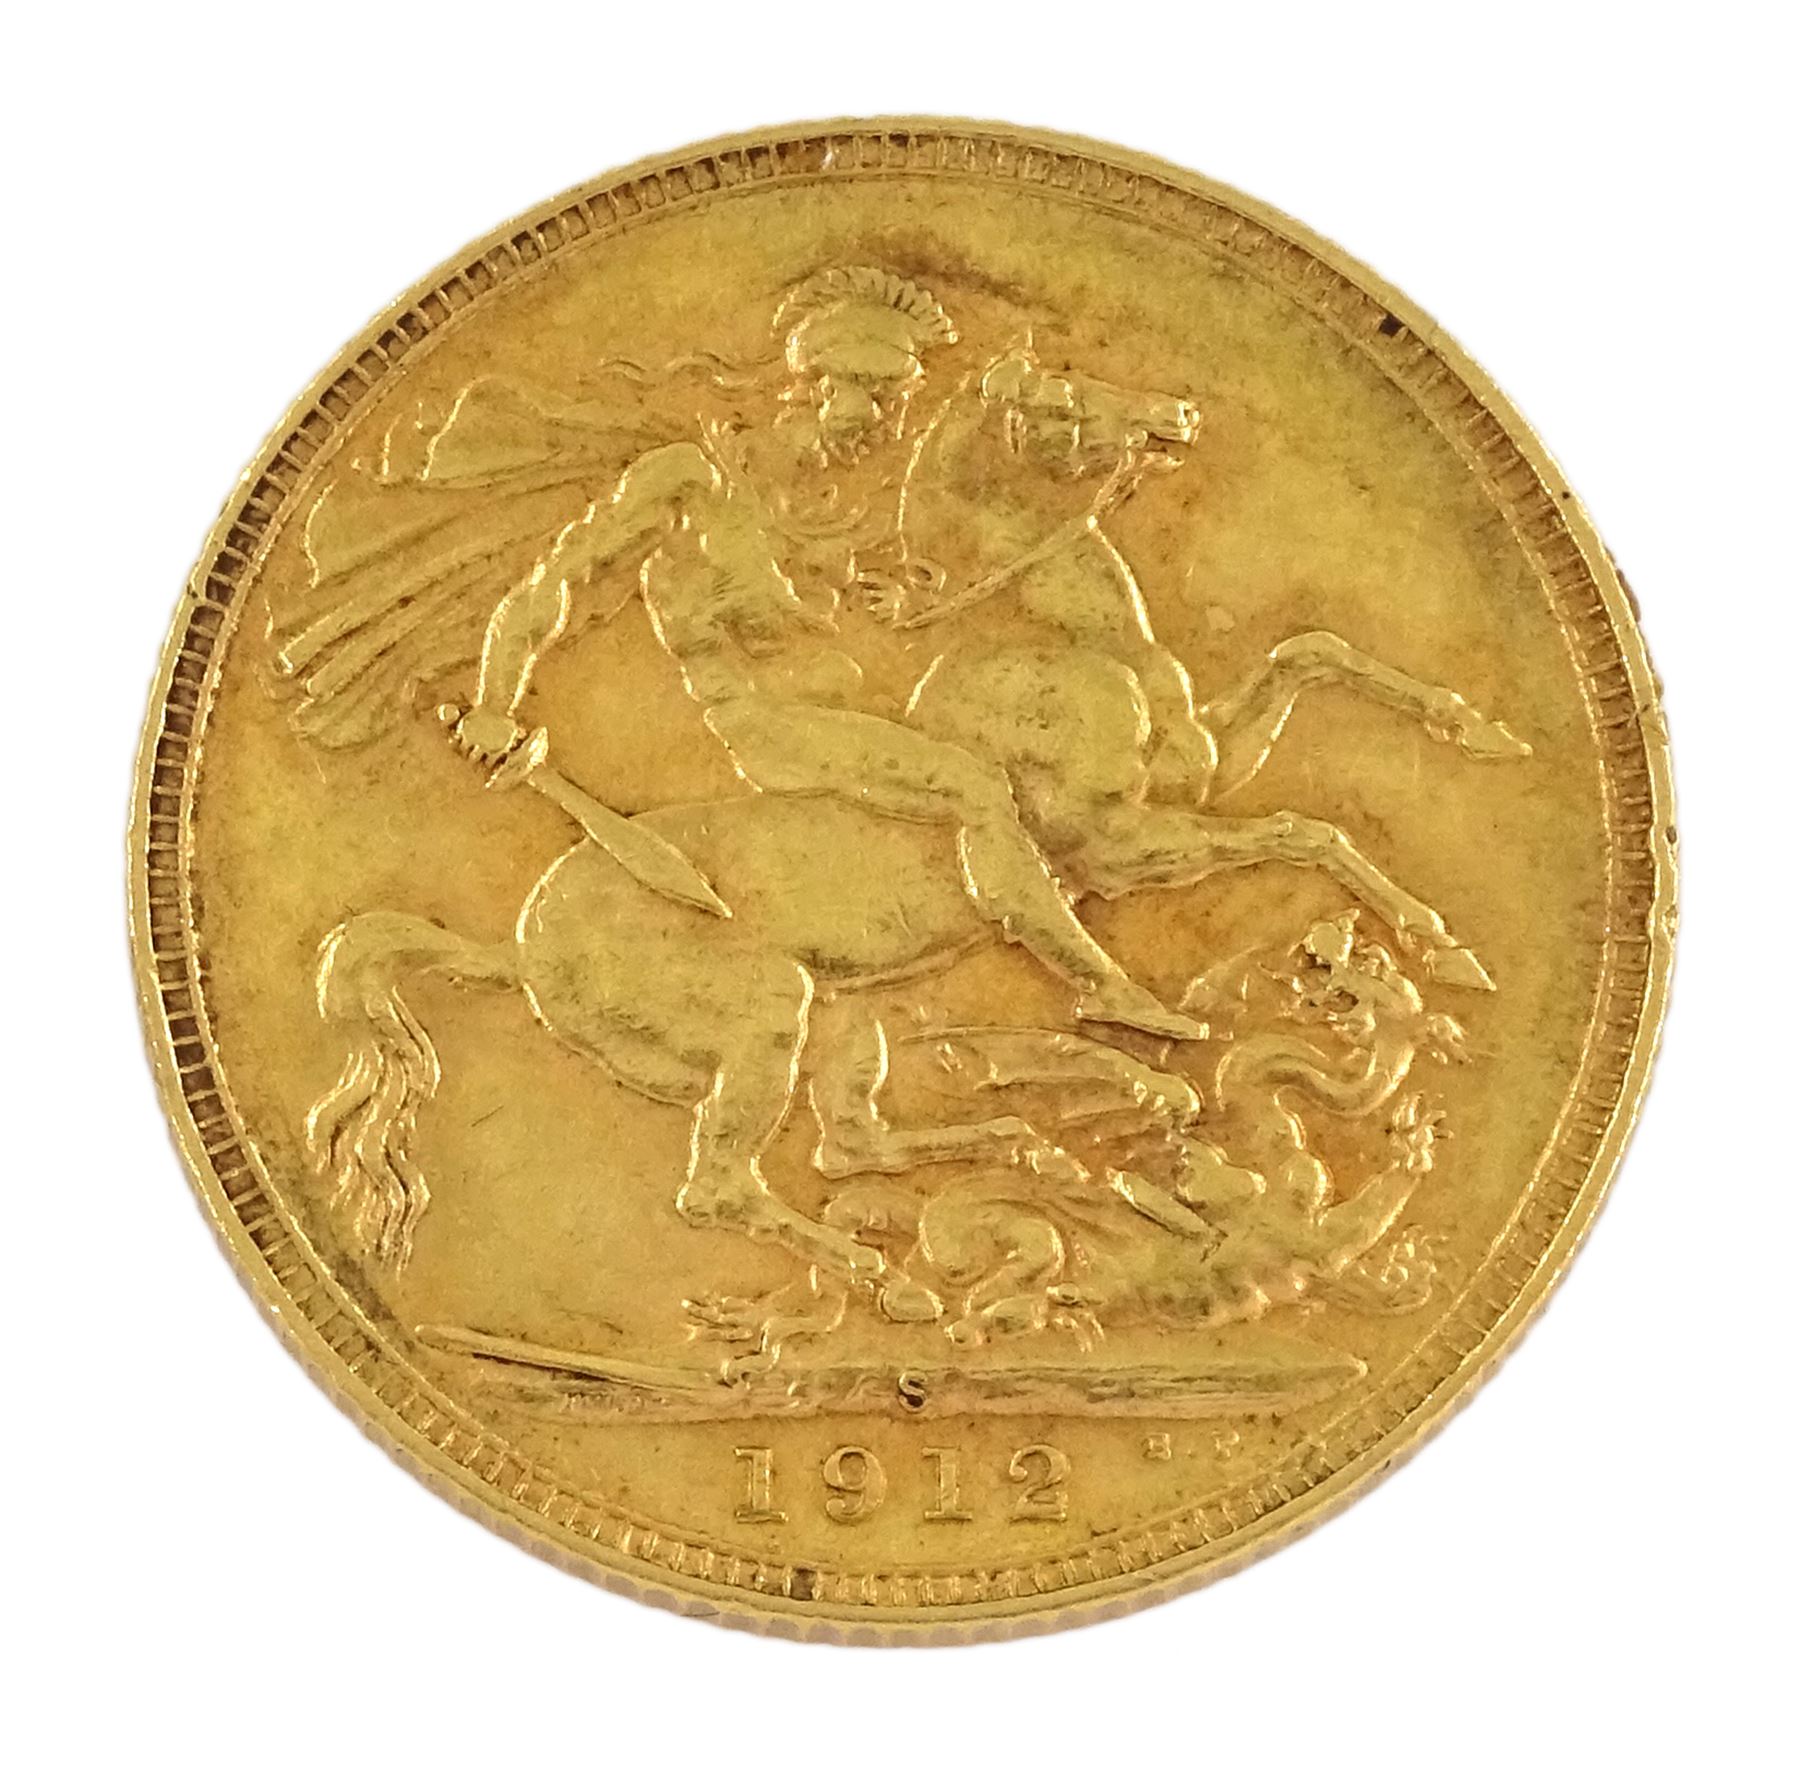 King George V 1912 gold full sovereign coin - Image 2 of 2